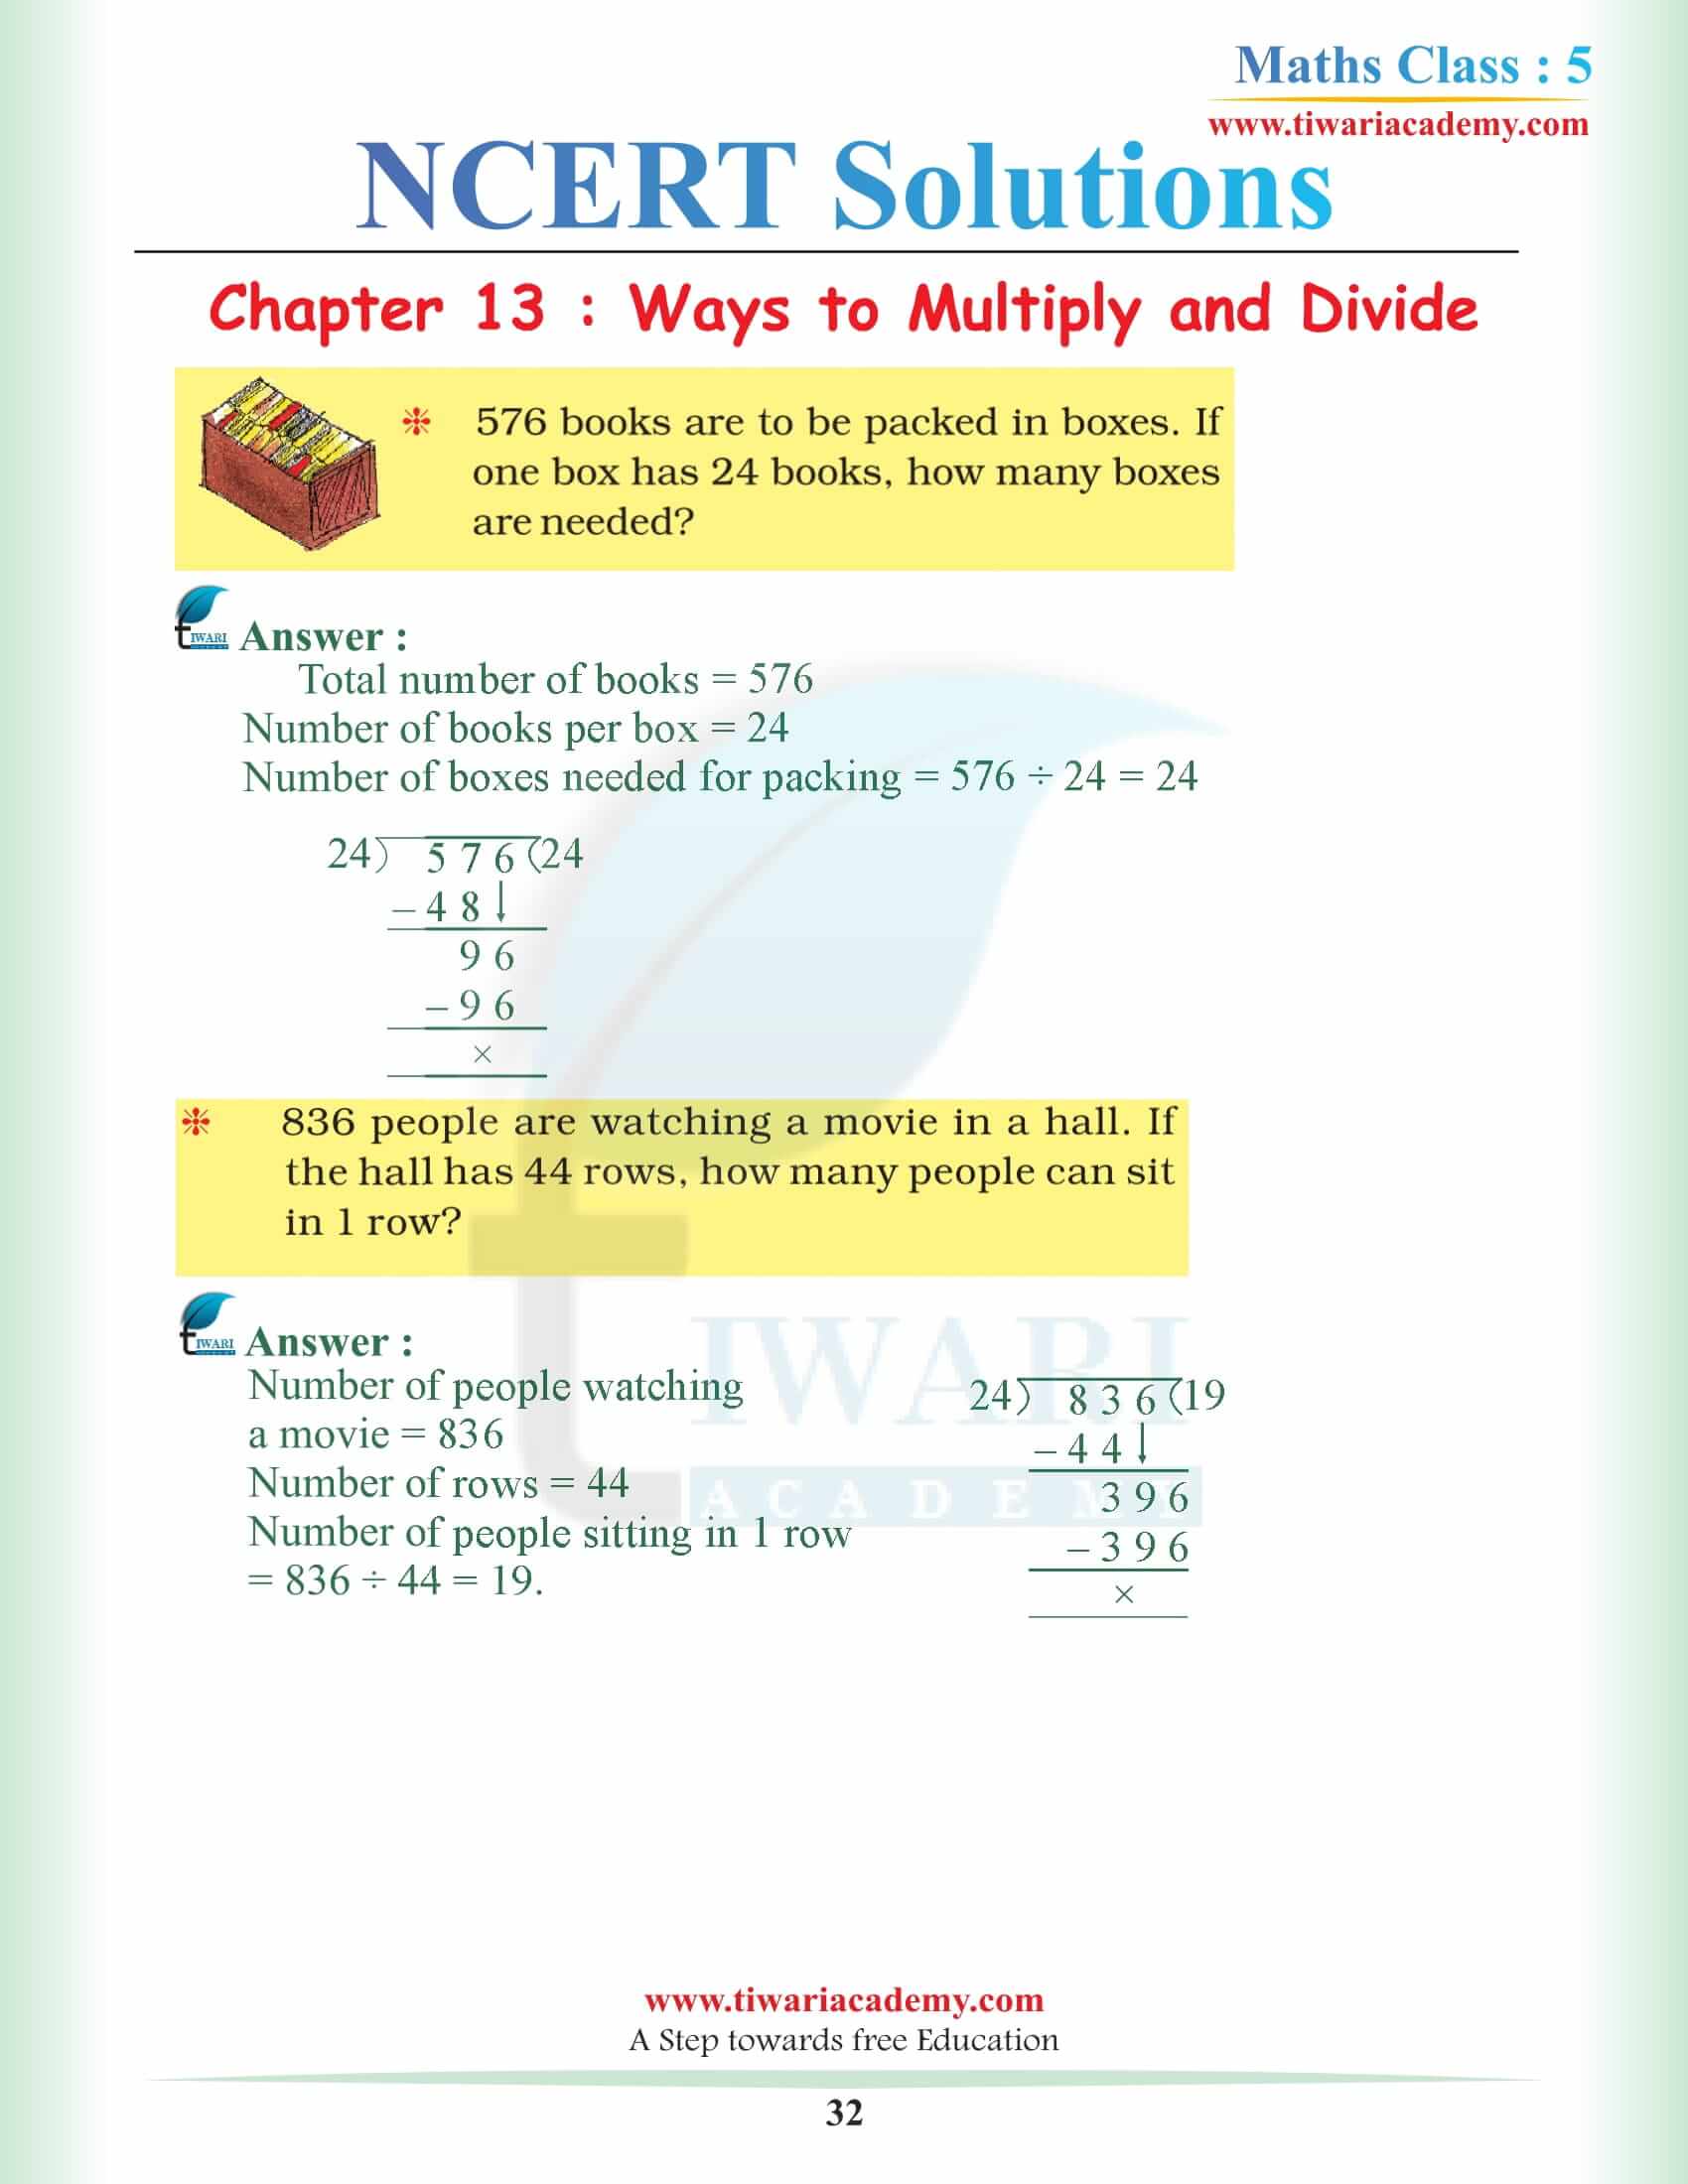 Maths 5th Class Chapter 13 NCERT free solutions